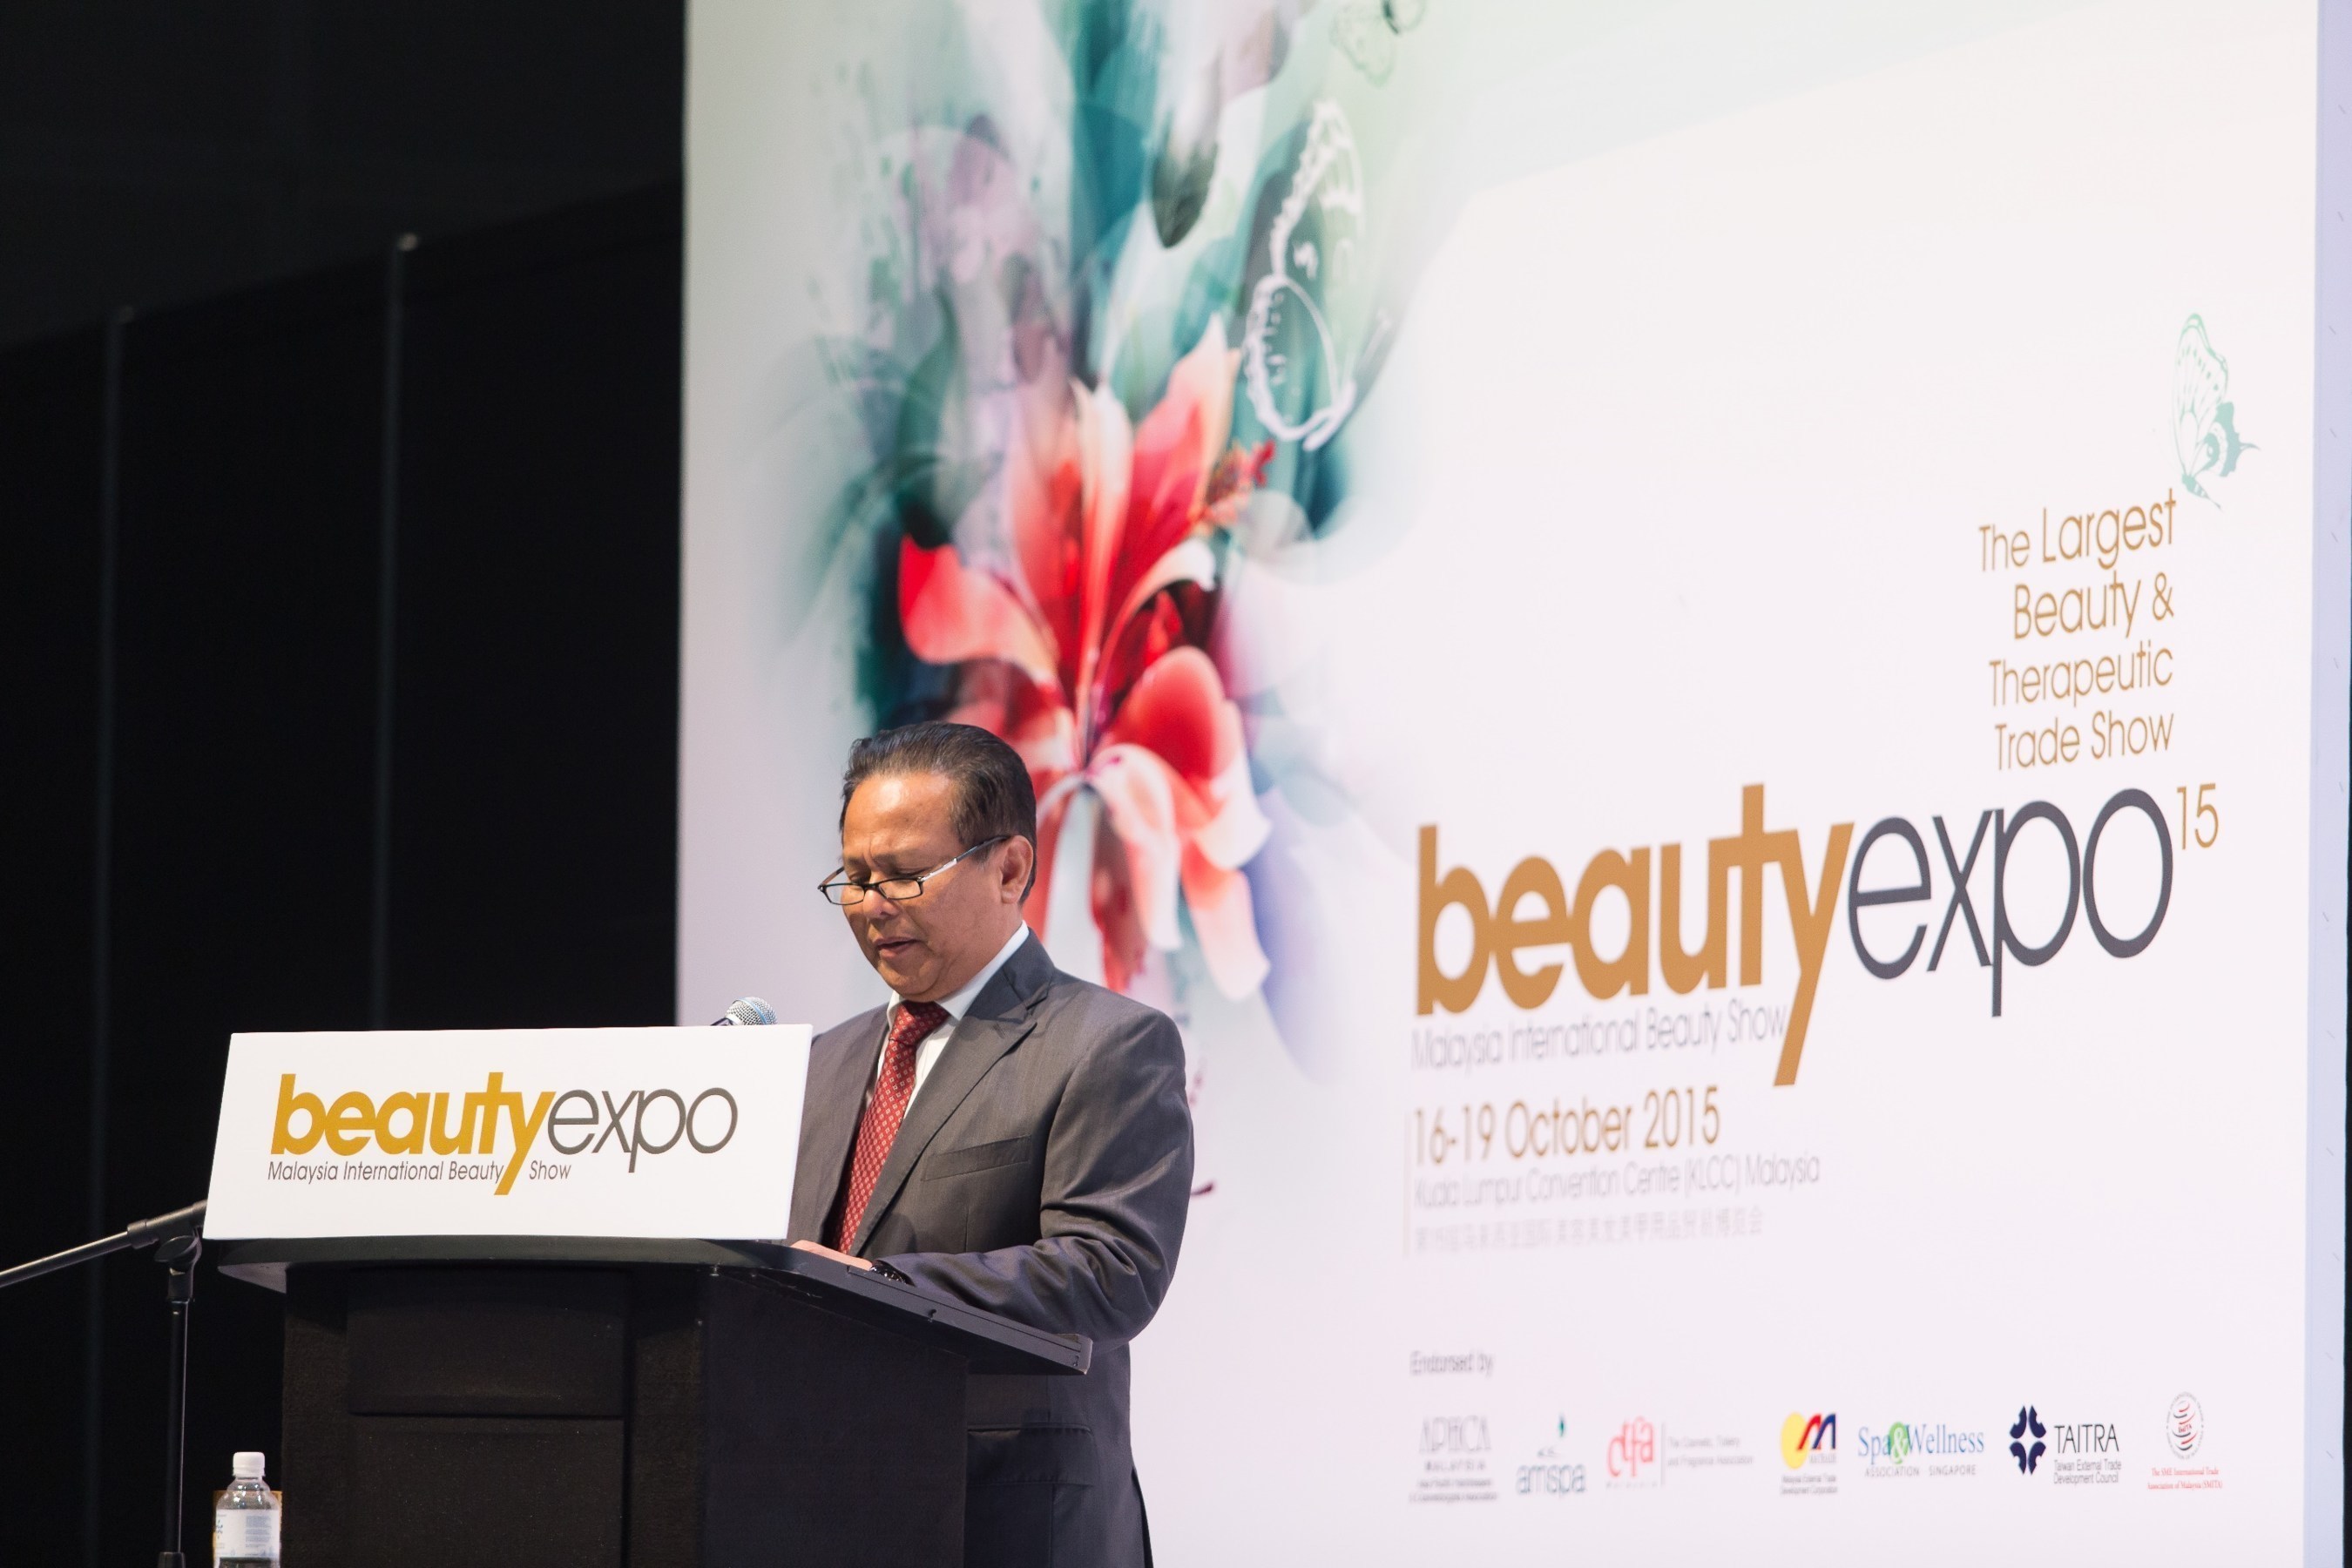 YBhg. Dato' Dzulkifli Mahmud, CEO of Malaysia External Trade Development Corporation (MATRADE) delivers his welcome speech at the Opening Ceremony of beautyexpo 2015